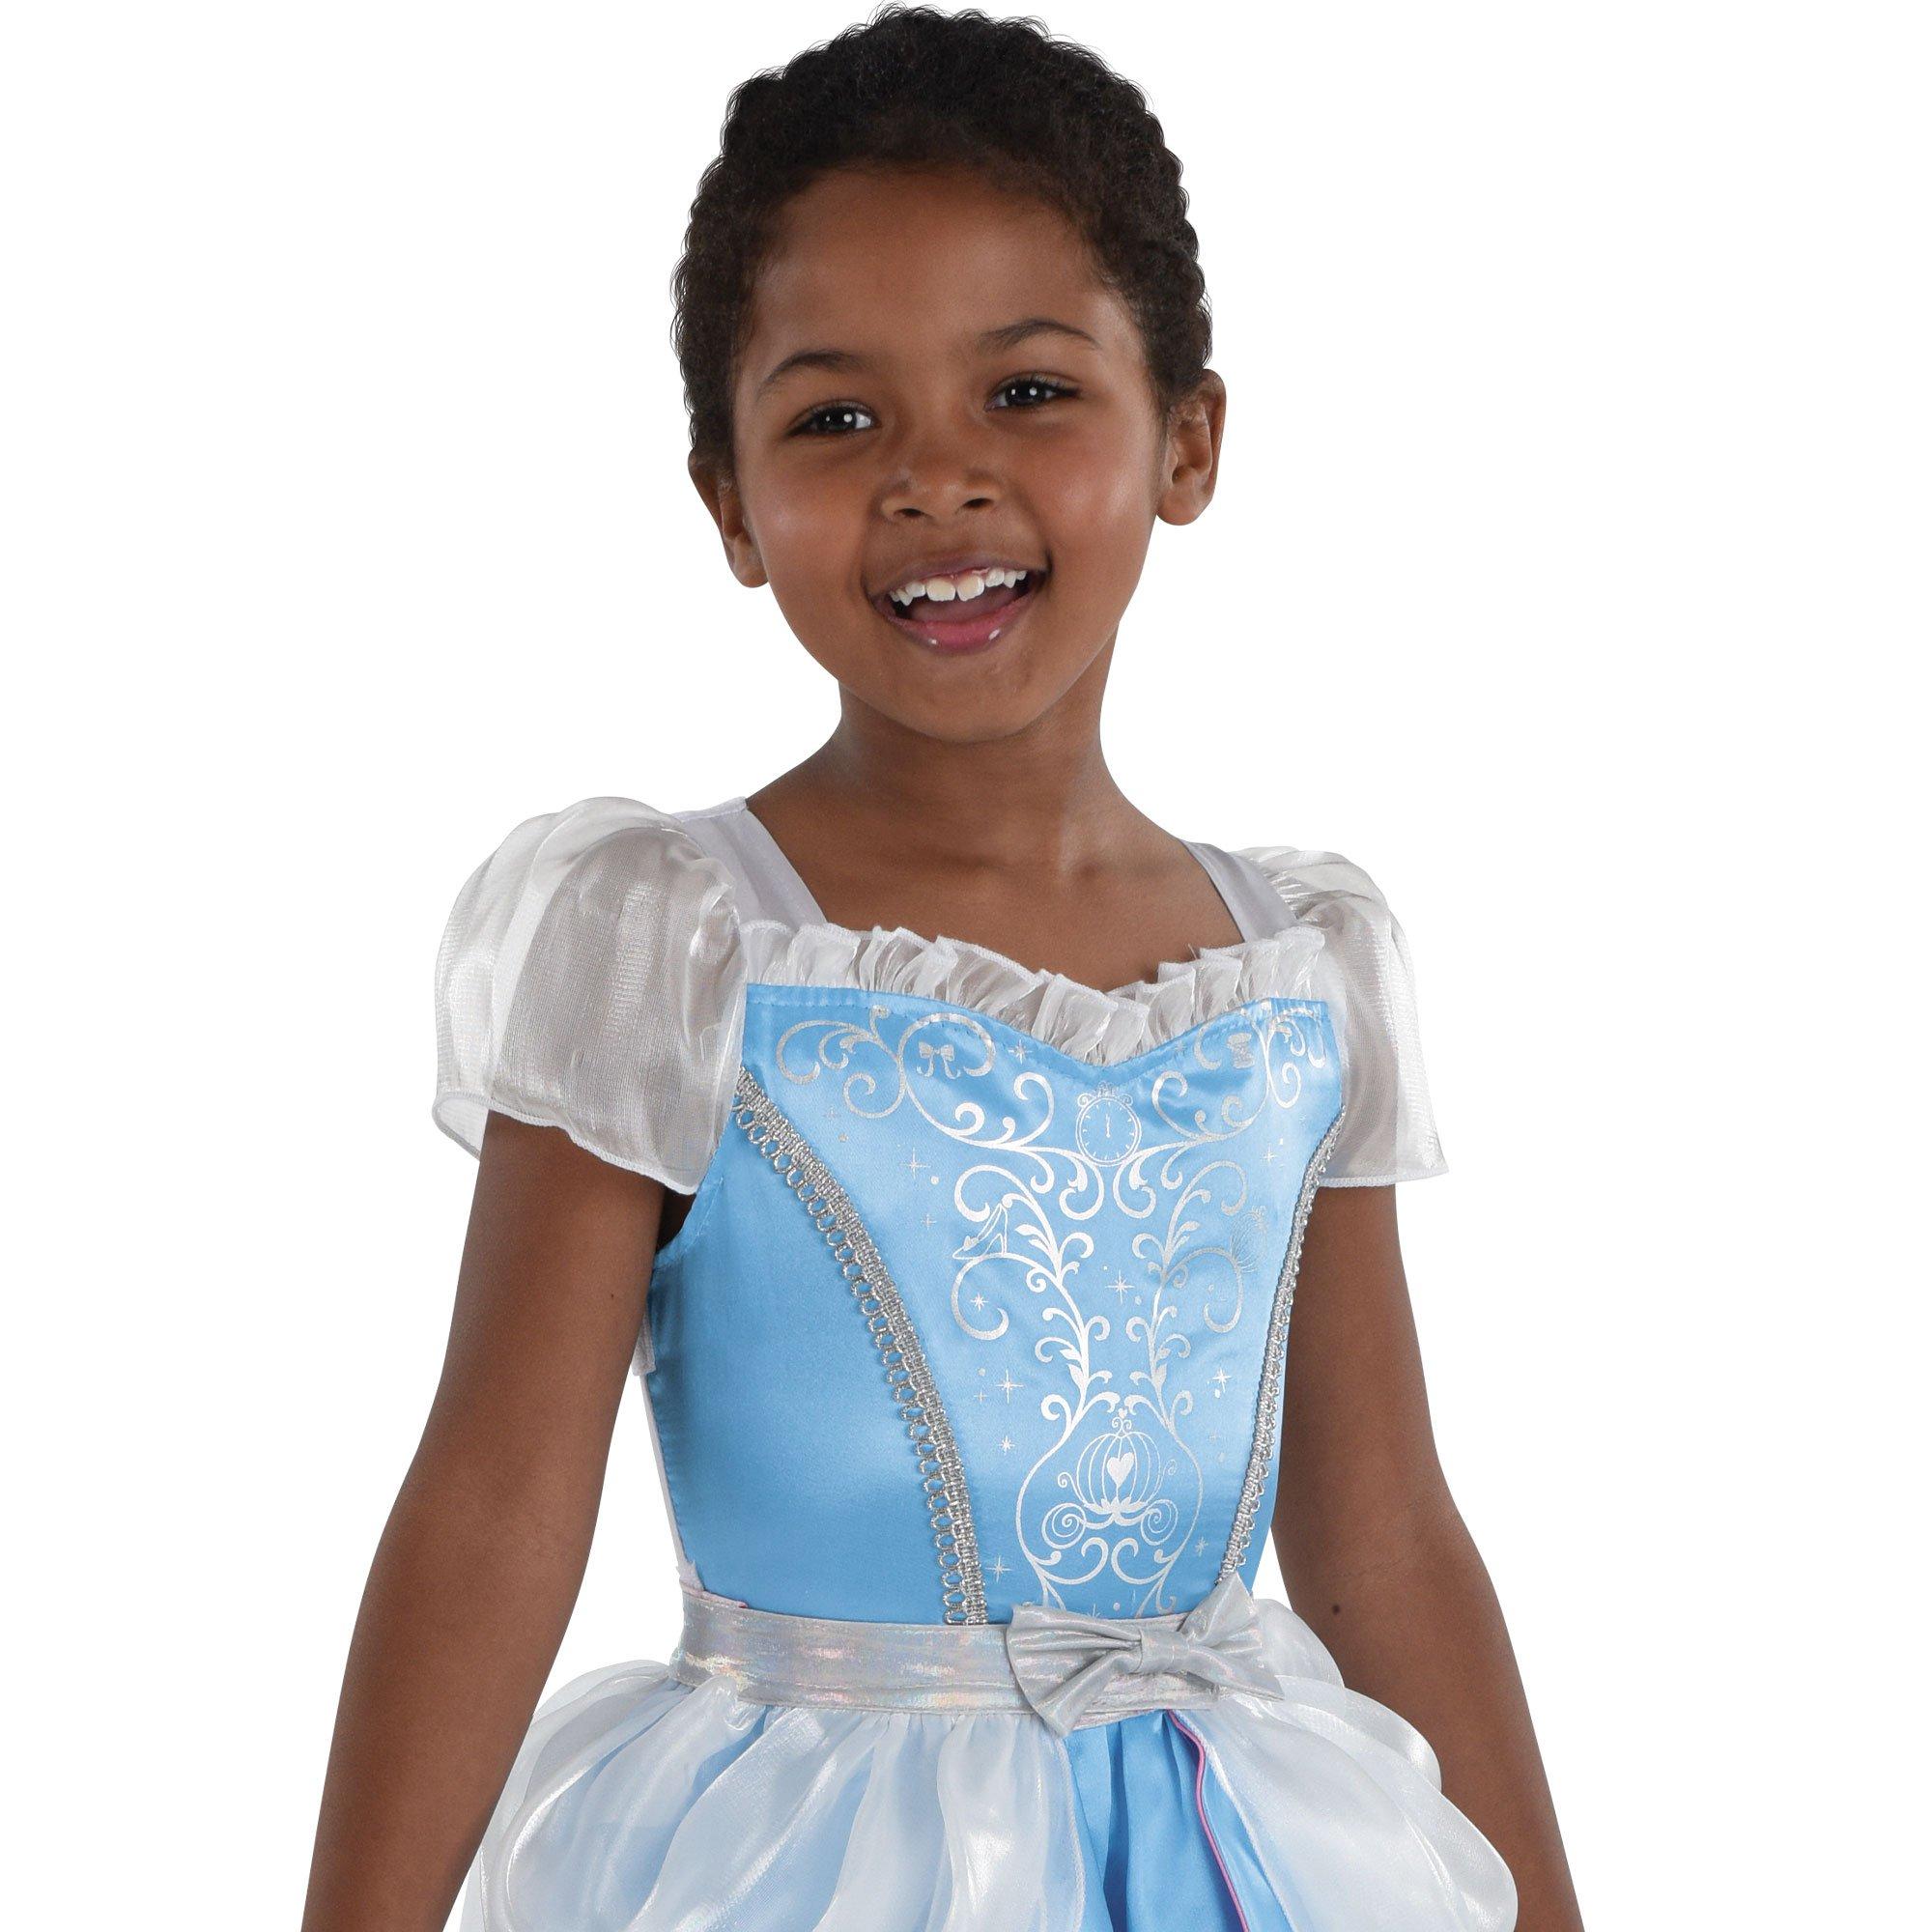 Party City Kids' Transforming Cinderella Costume